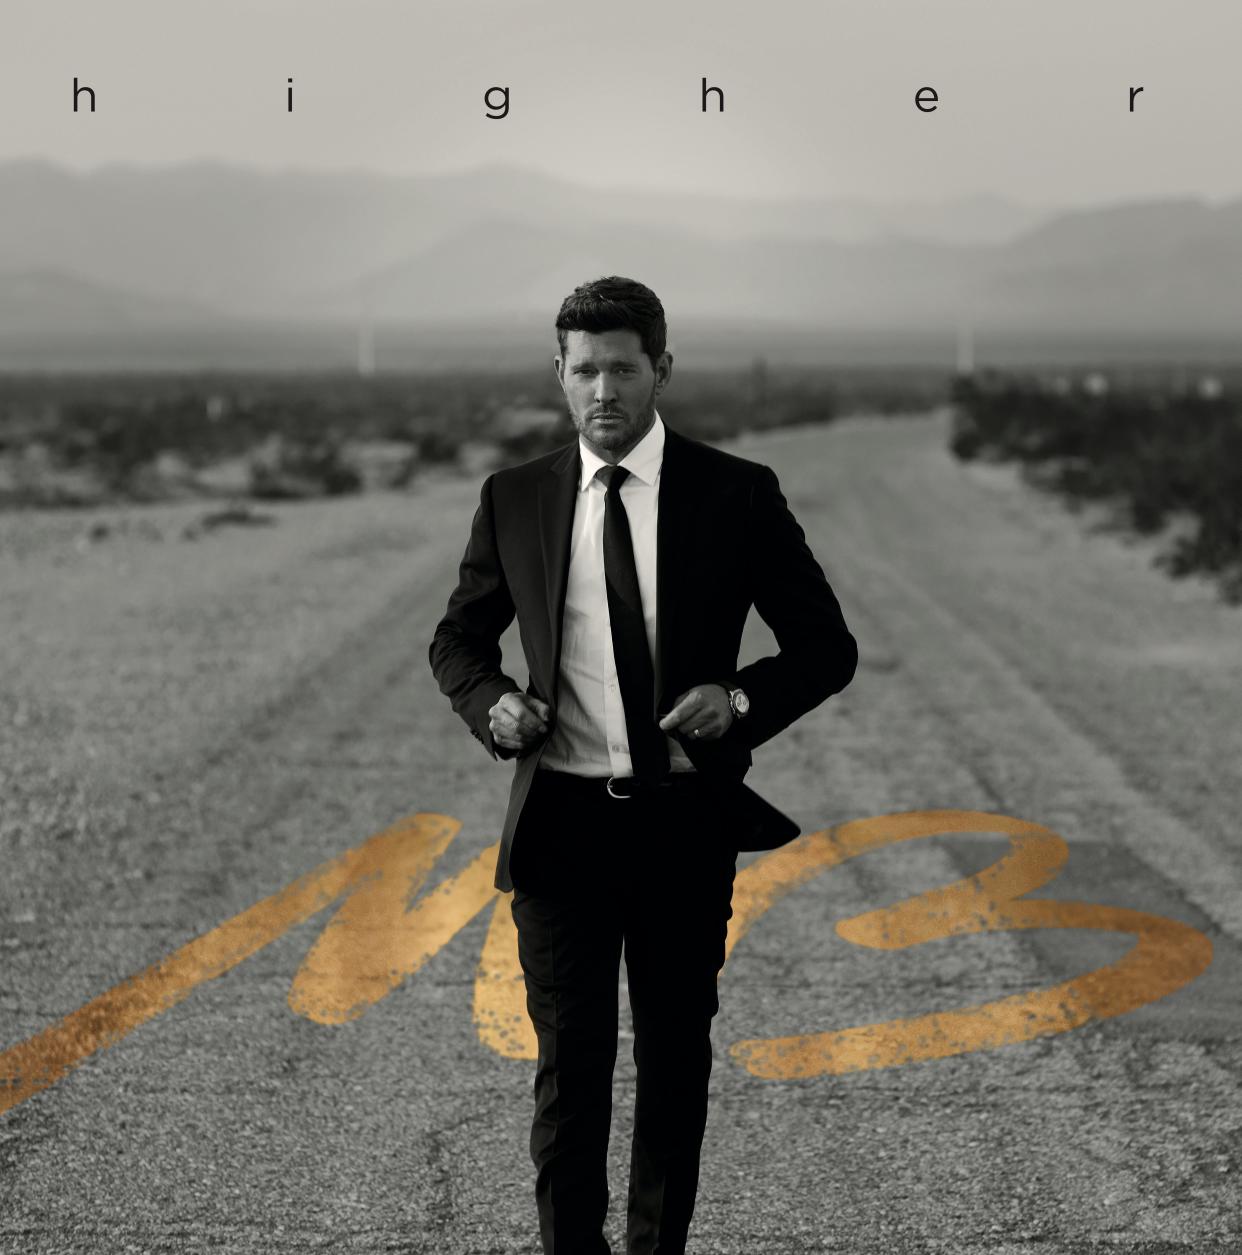 Michael Buble's new studio album, "Higher," arrives on Friday.